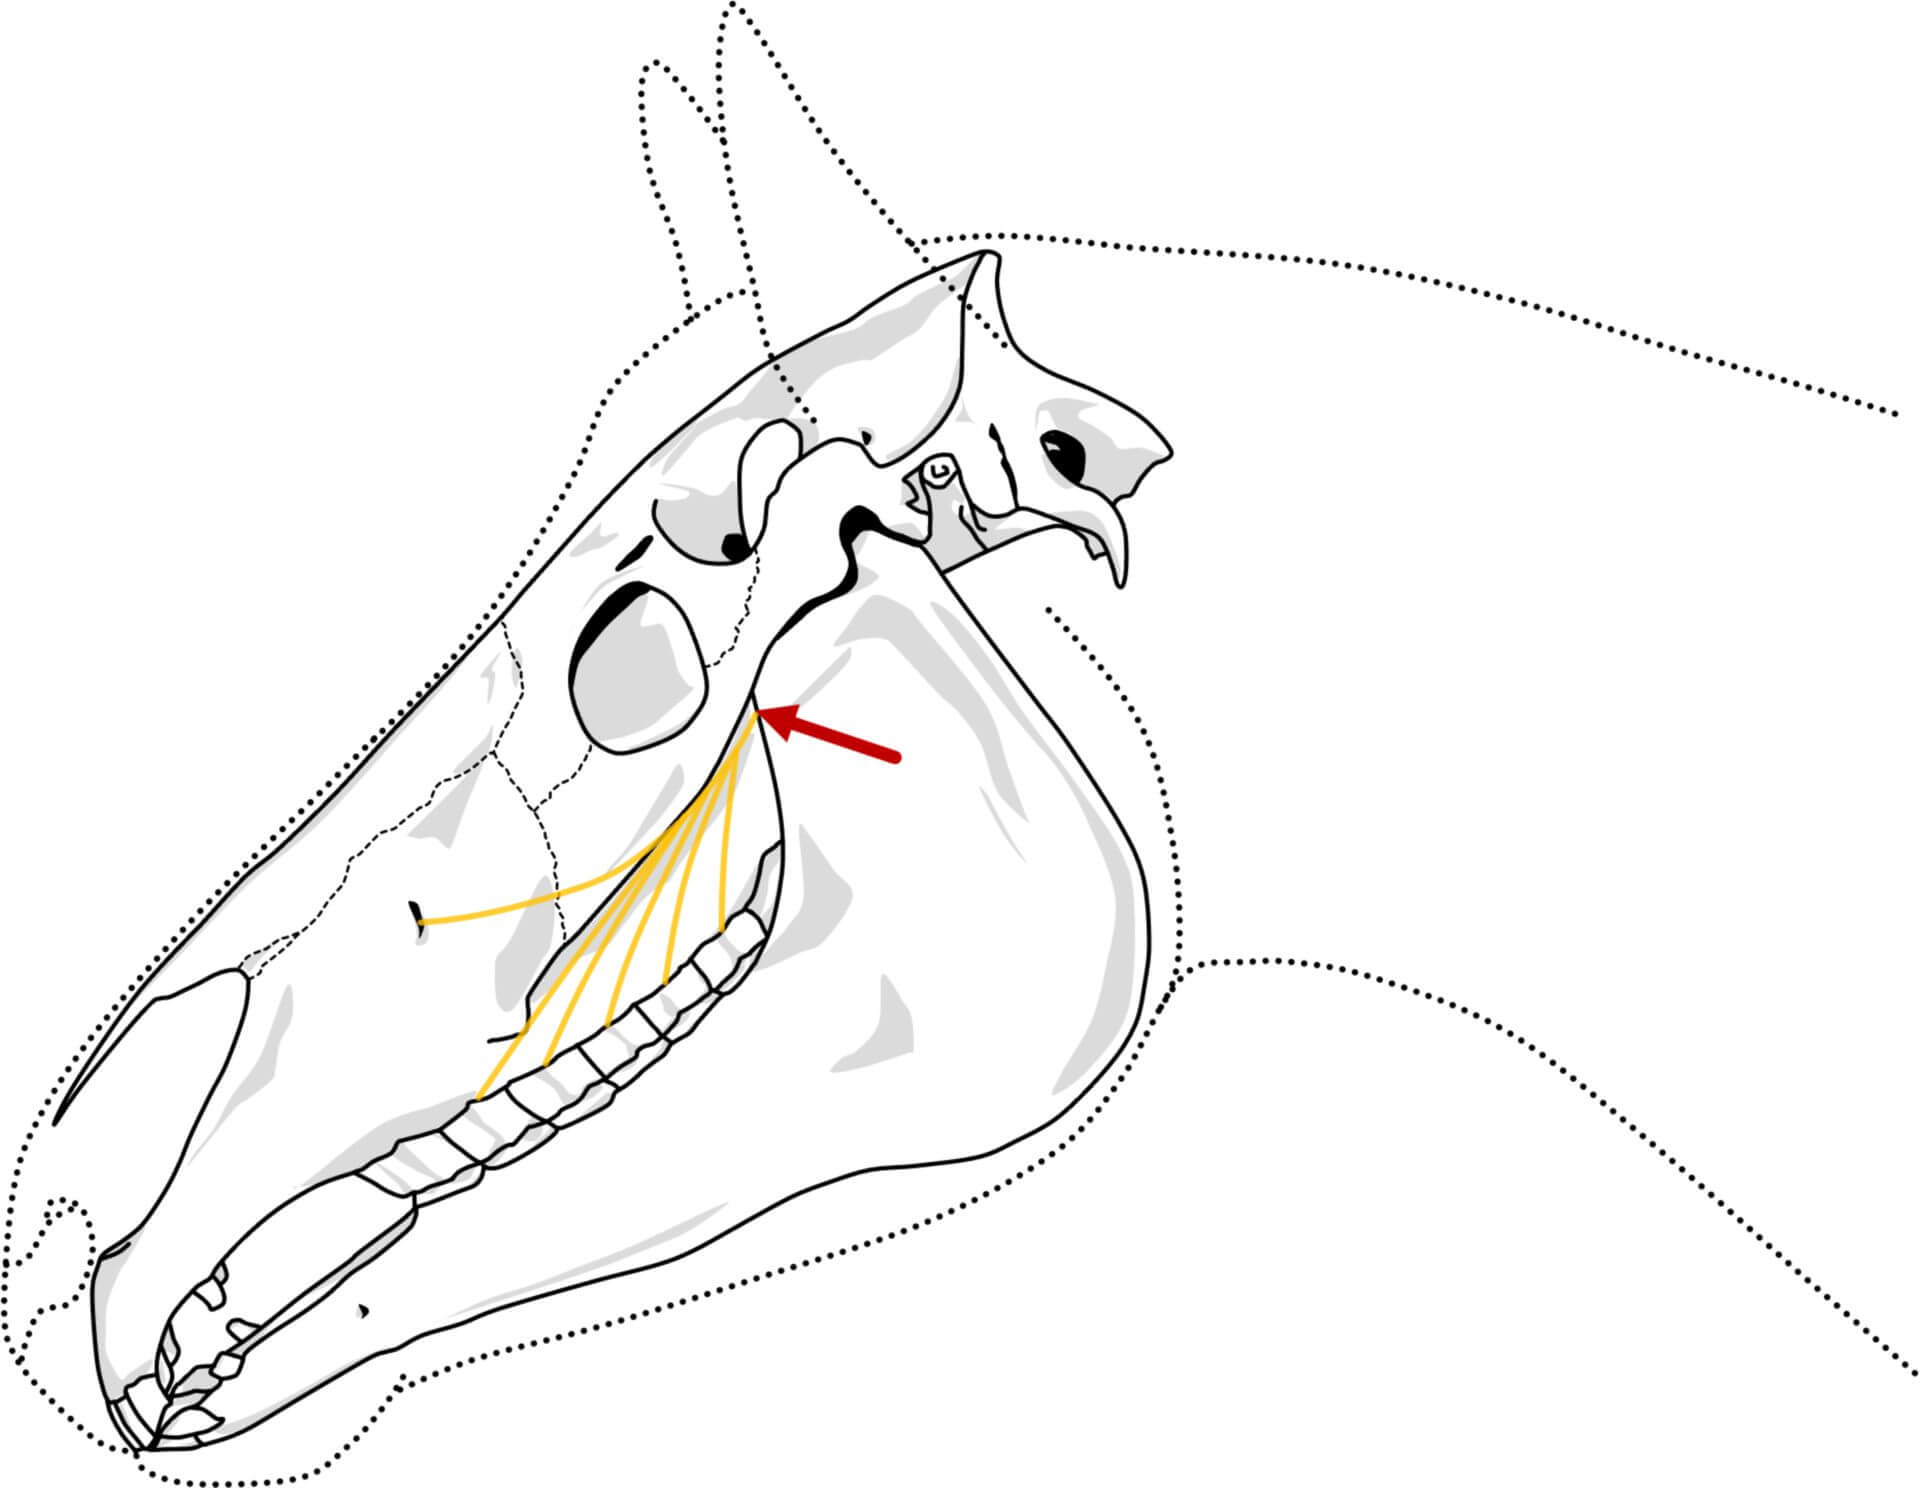 Foramen-maxillare-Anästhesie (© Patrick Messner)